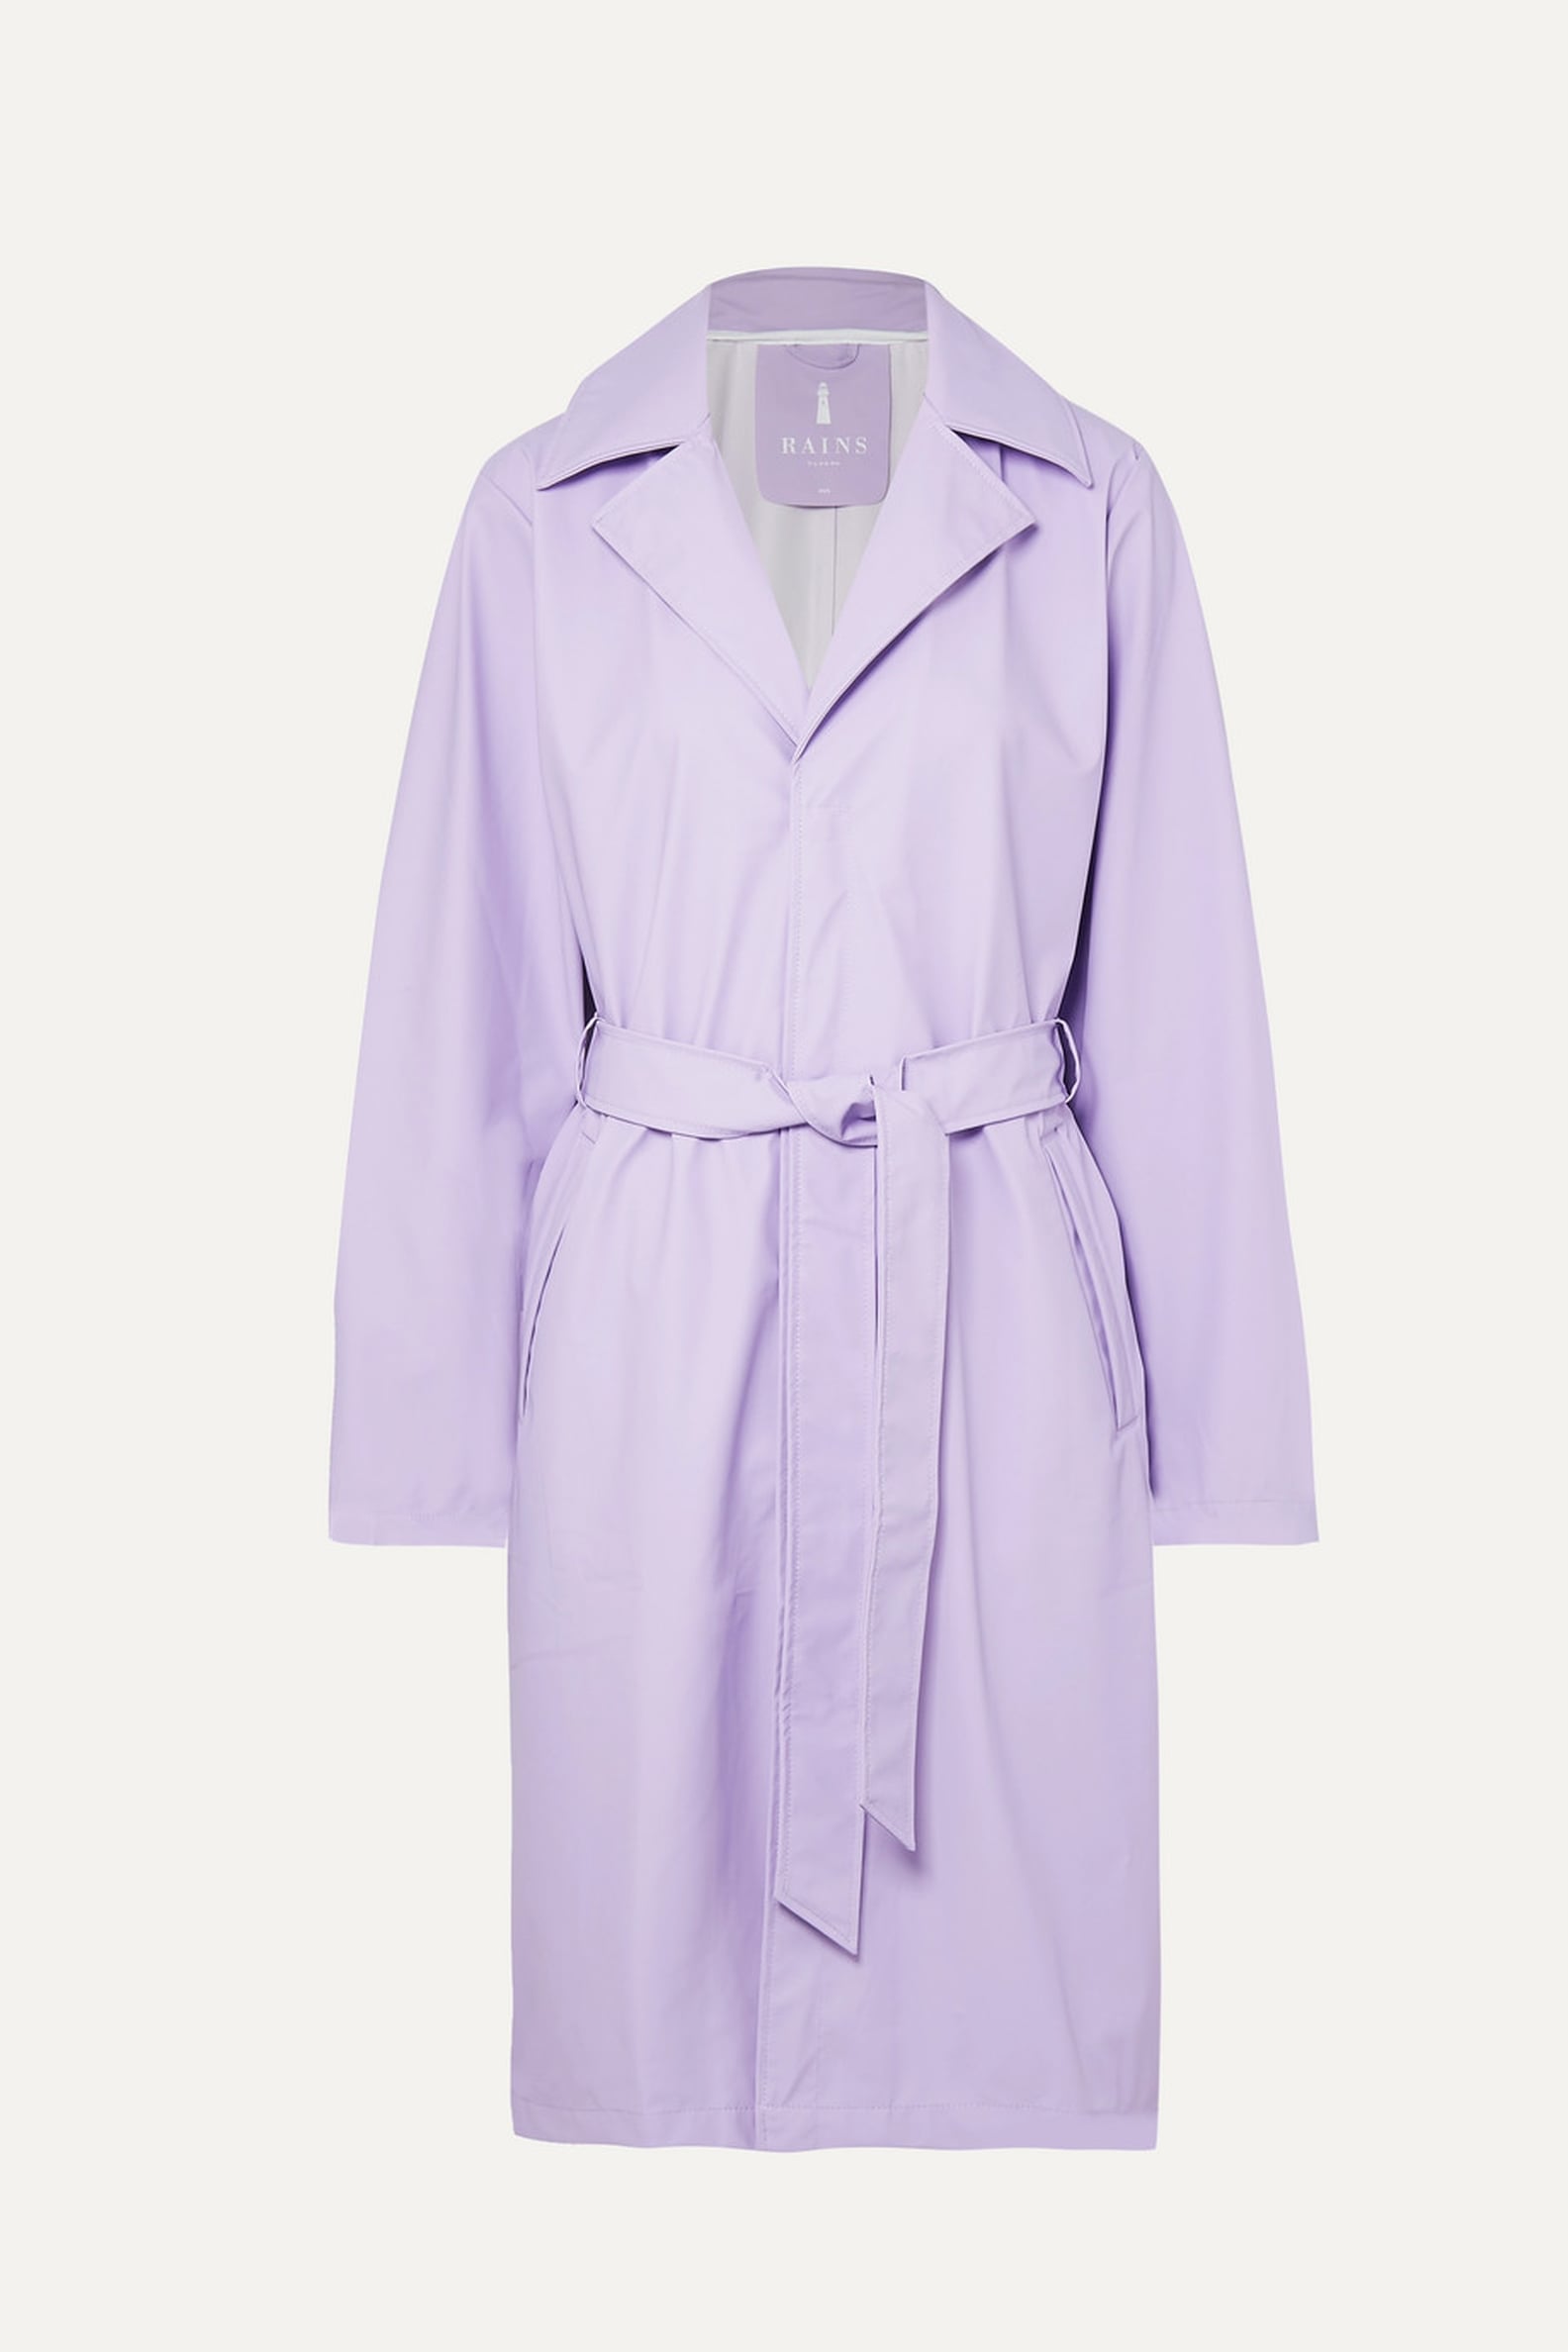 Hailey Baldwin in Lavender Coat With Justin Bieber | POPSUGAR Fashion